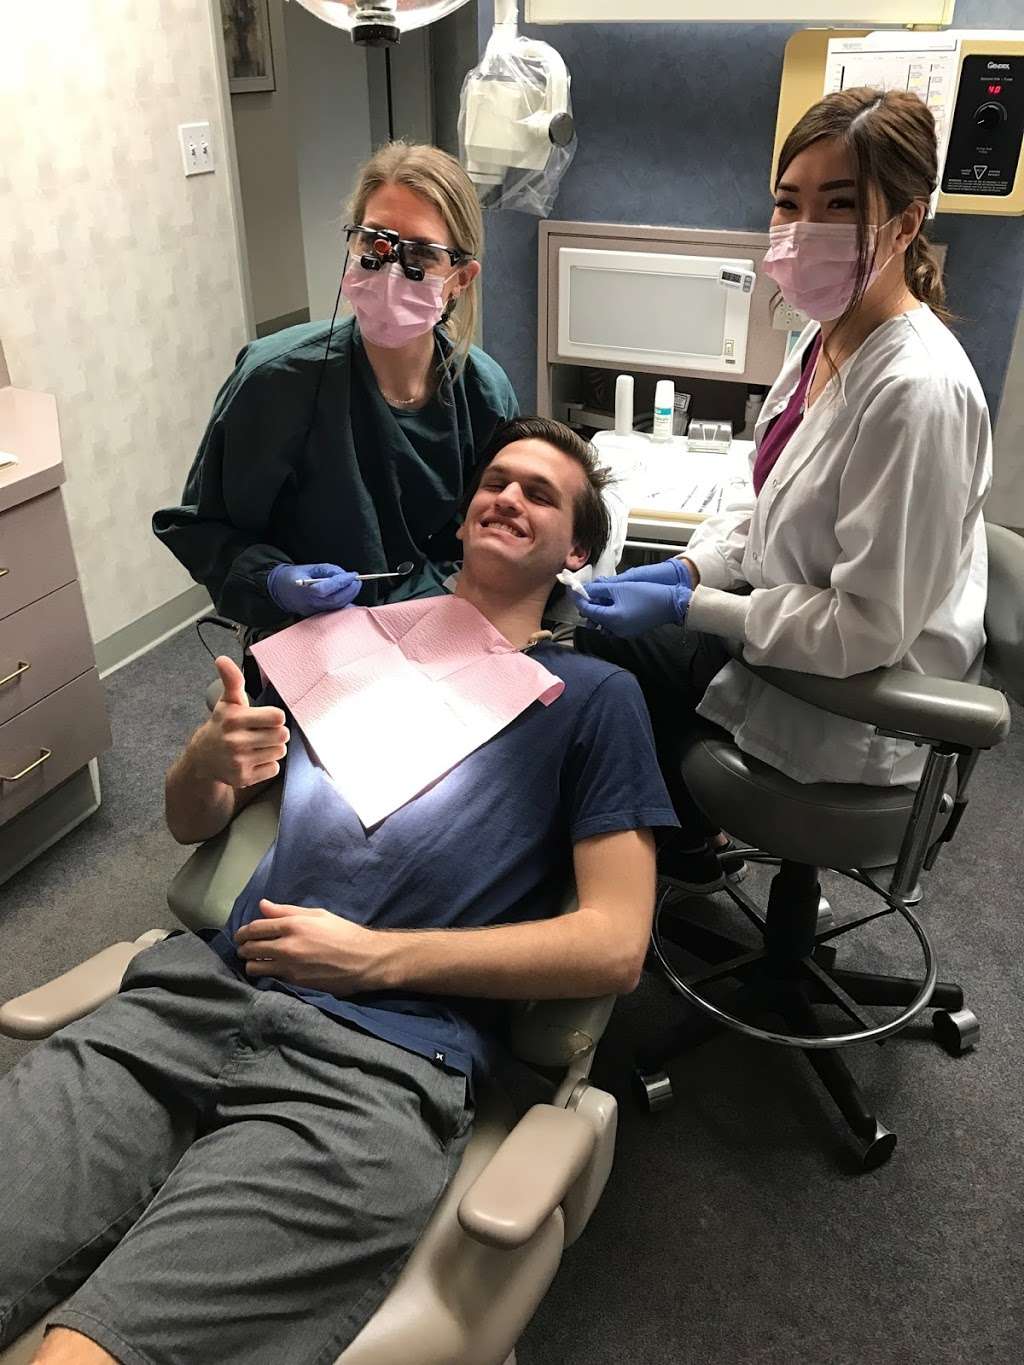 Nagel Dentistry: Chris D. Nagel DDS, Vincent L. Nagel DDS, & Ann | 18035 Bushard St, Fountain Valley, CA 92708, USA | Phone: (714) 962-1306